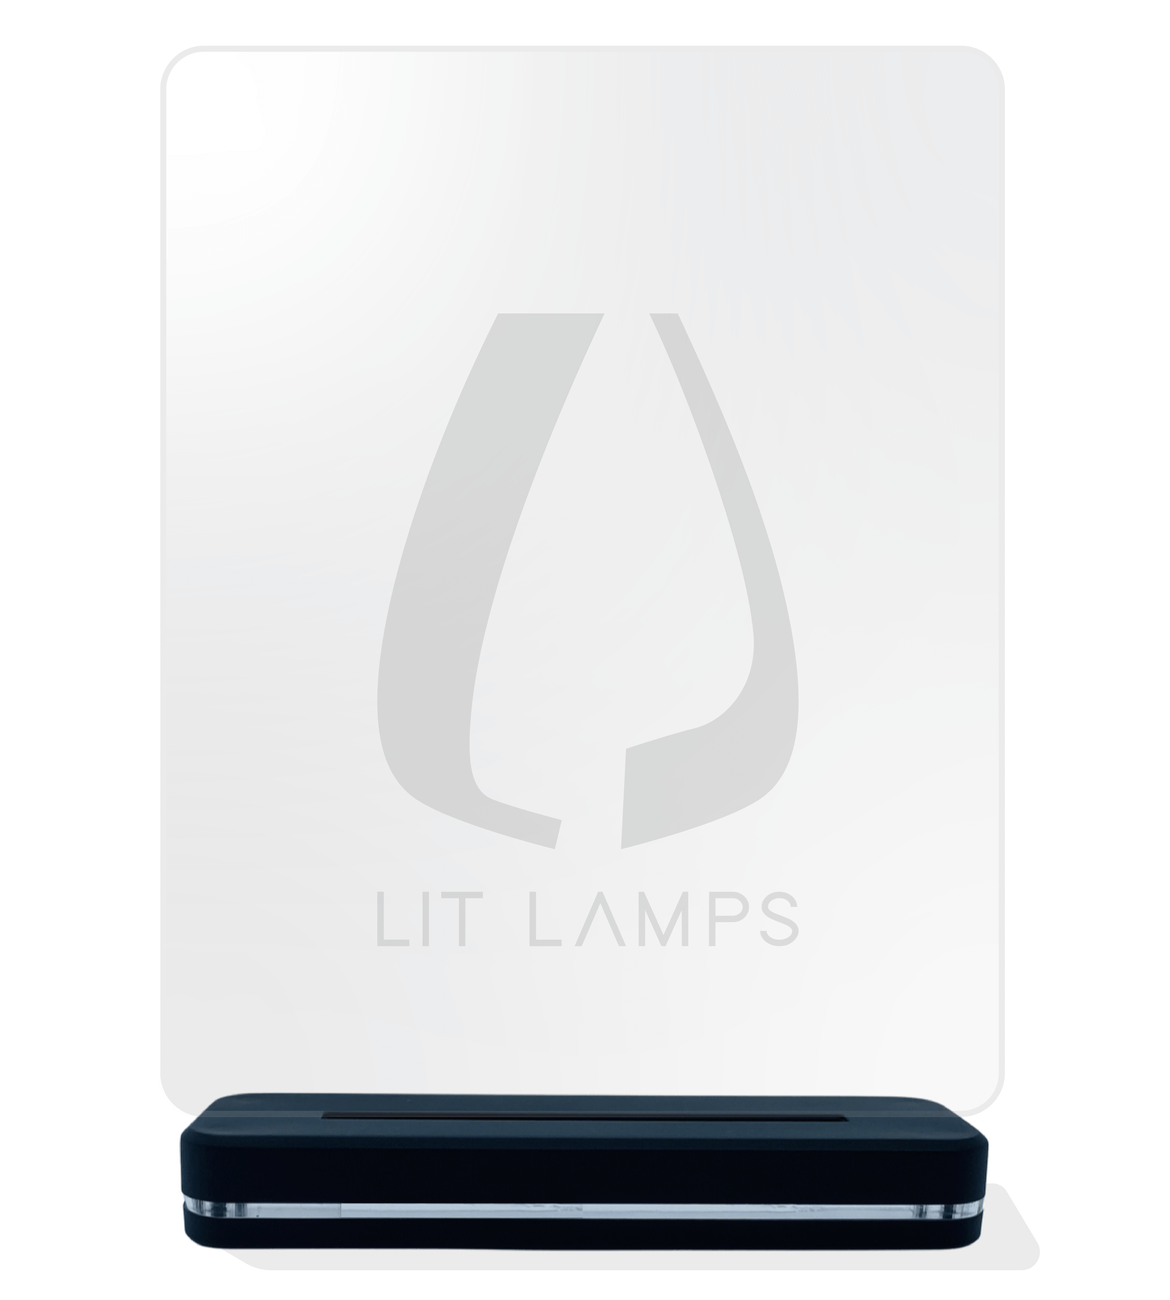 Spiral Modern Home Decor Aesthetic Table LIT 3D Illusion Lamp - LIT Lamps - Spiral 3D LED Lamp-3d Lamps